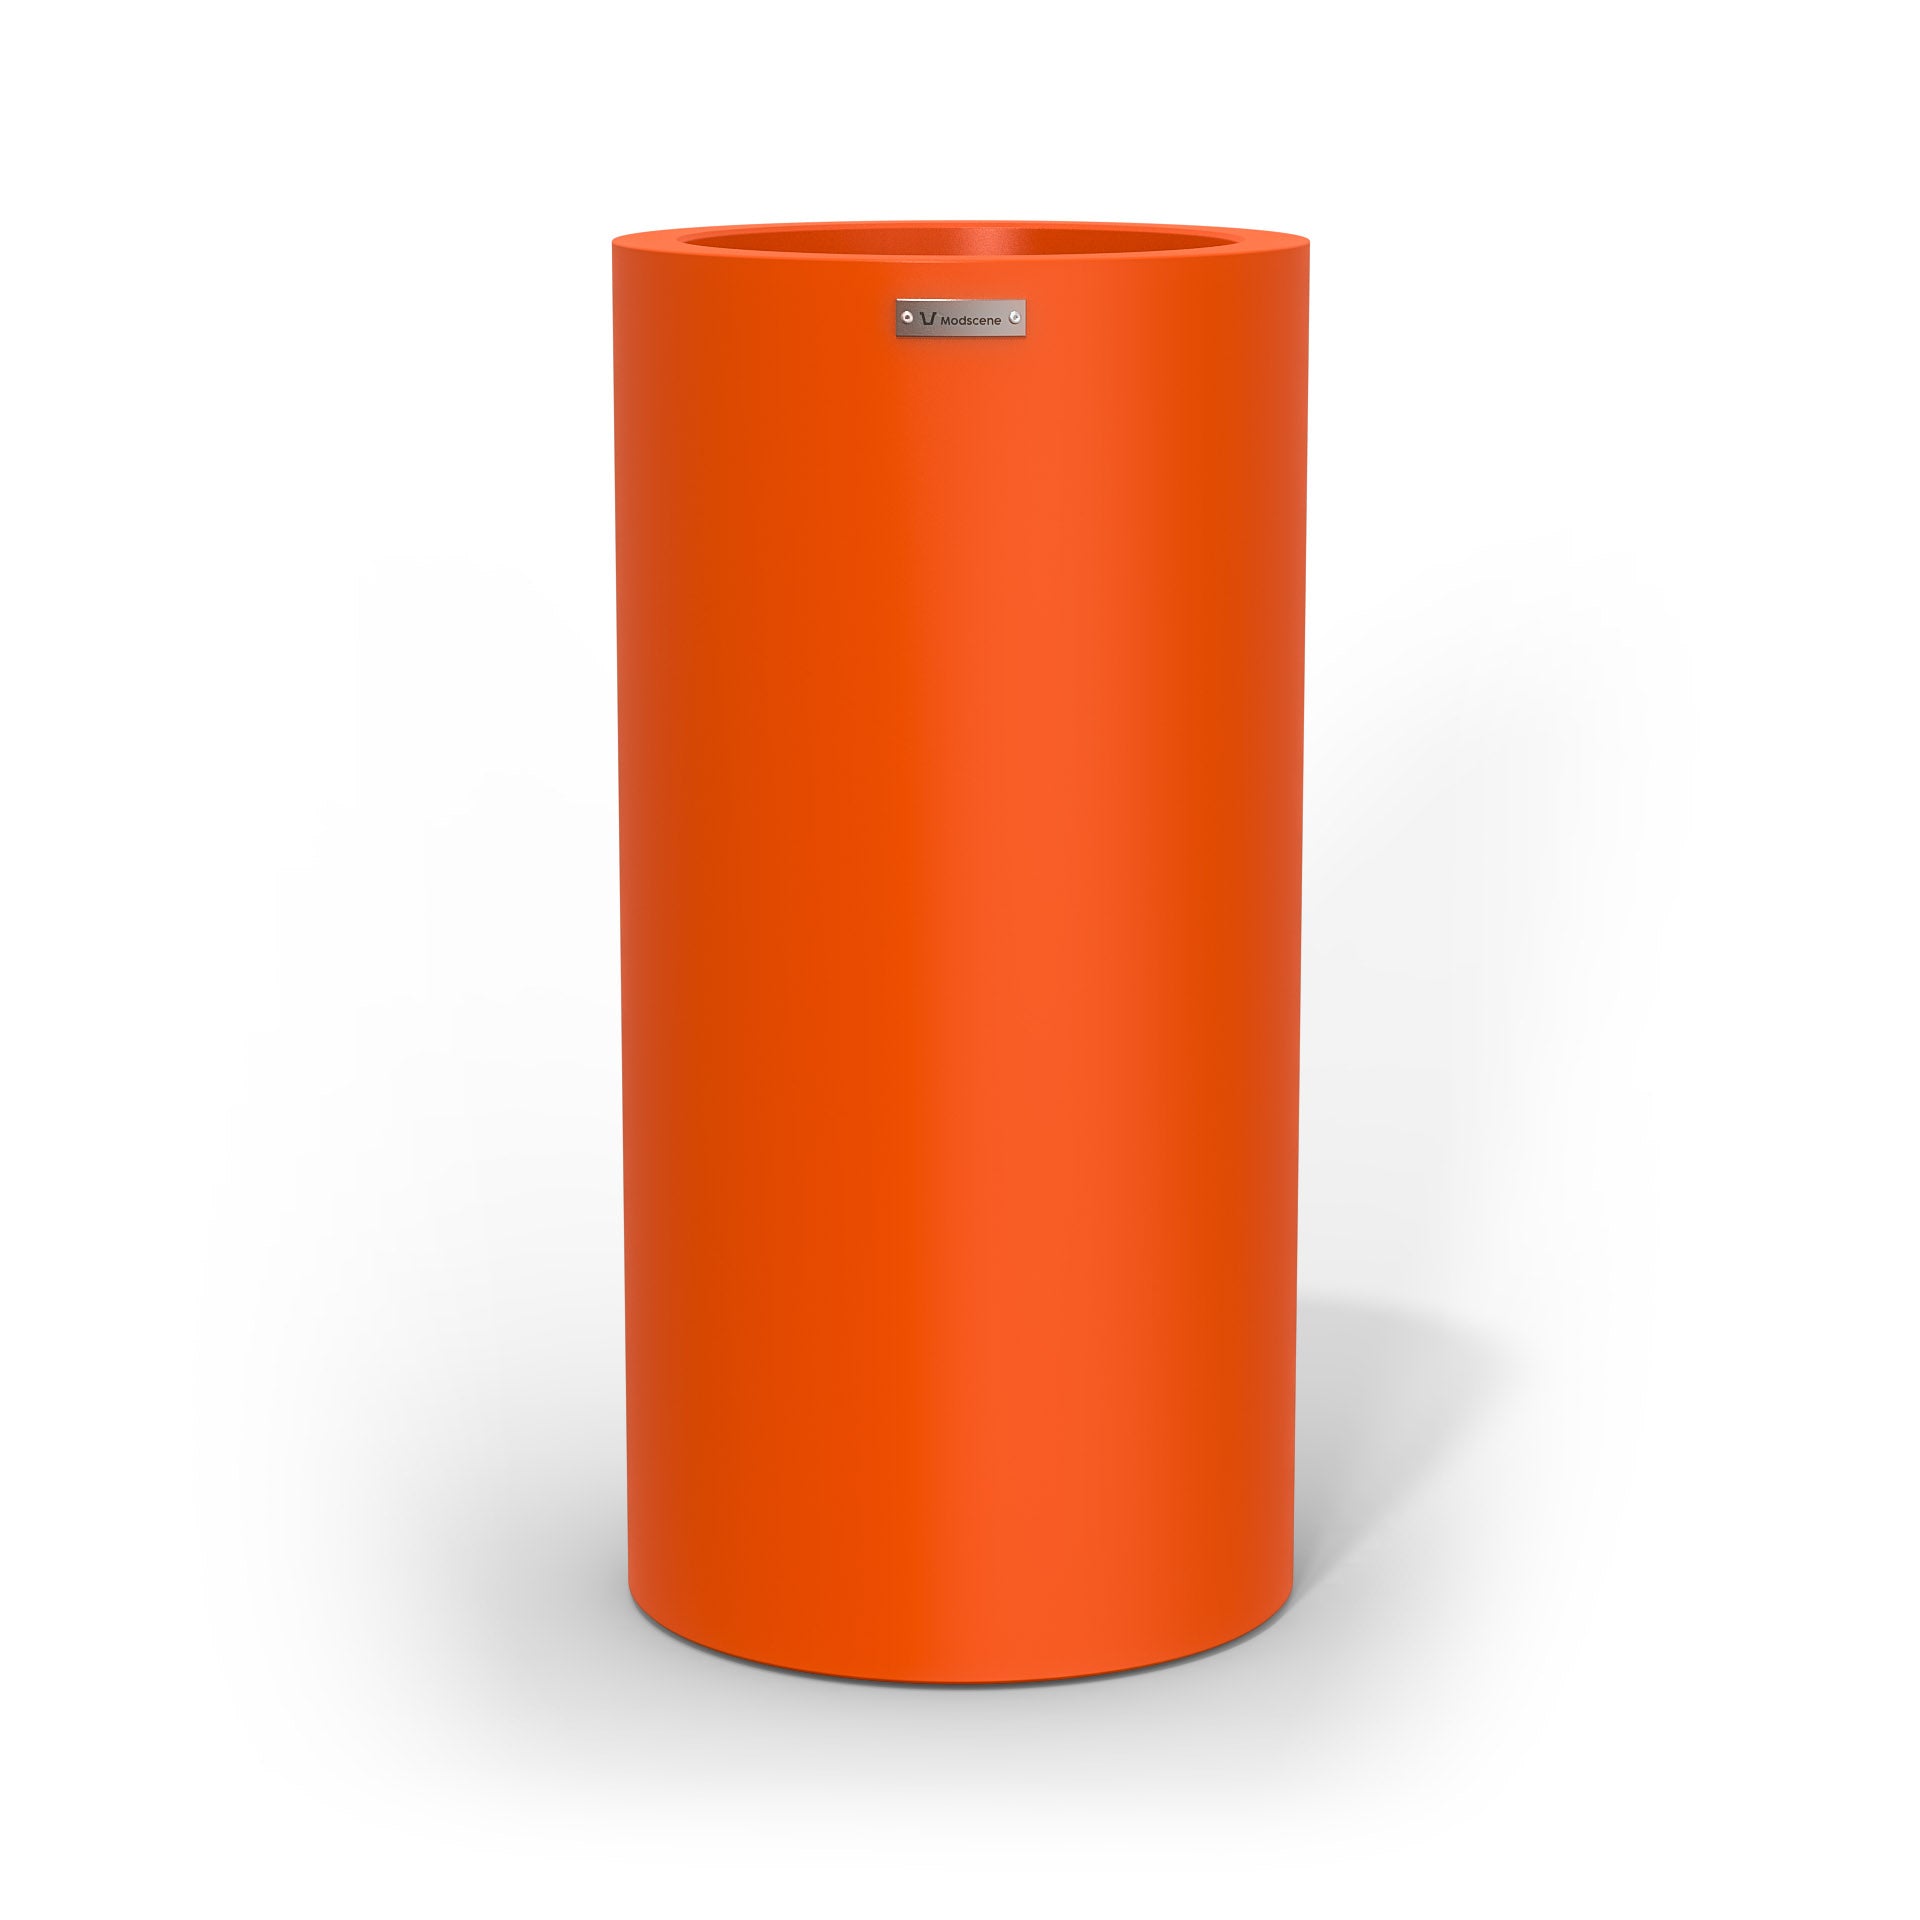 A tall cigar cylinder planter pot in orange made by Modscene.